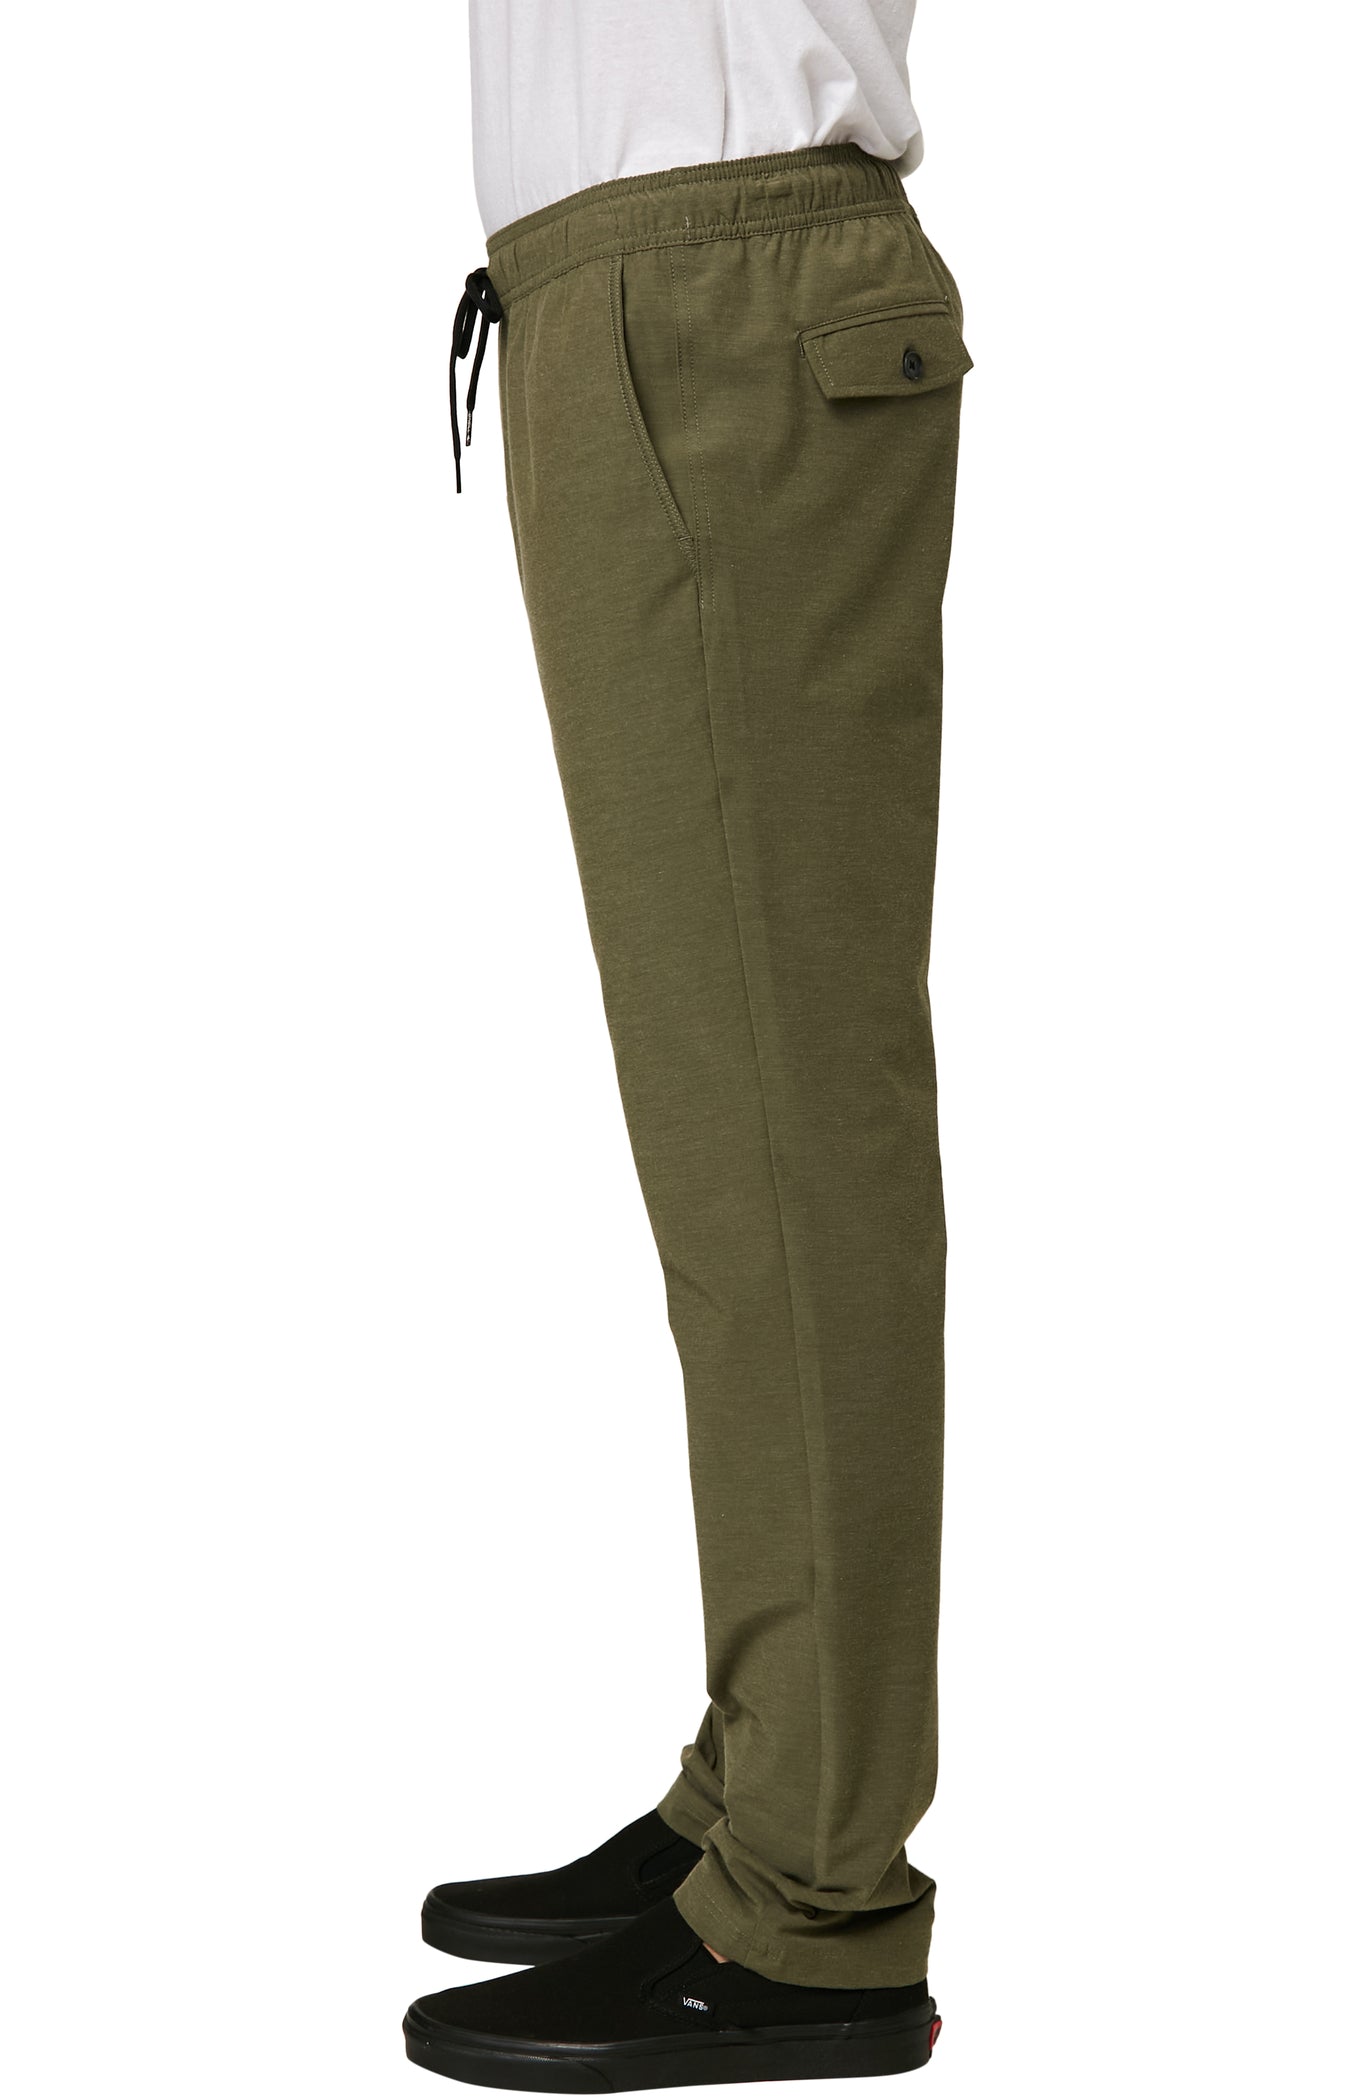 Item 700611 - Stoic Hybrid Legging - Men's Casual Pants - Size